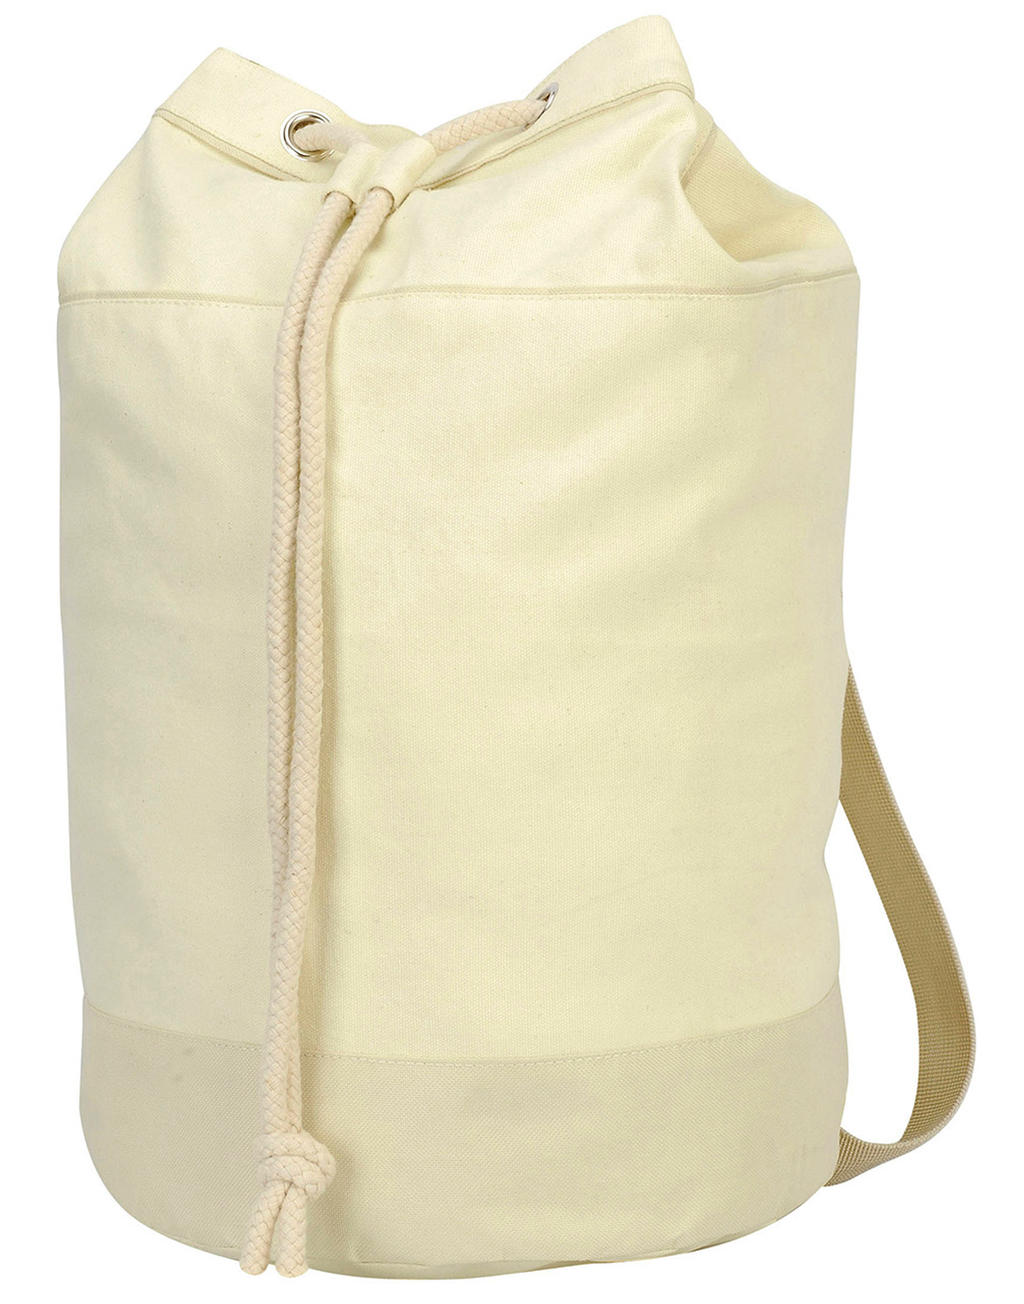  Newbury Canvas Duffle Bag in Farbe Natural Cotton